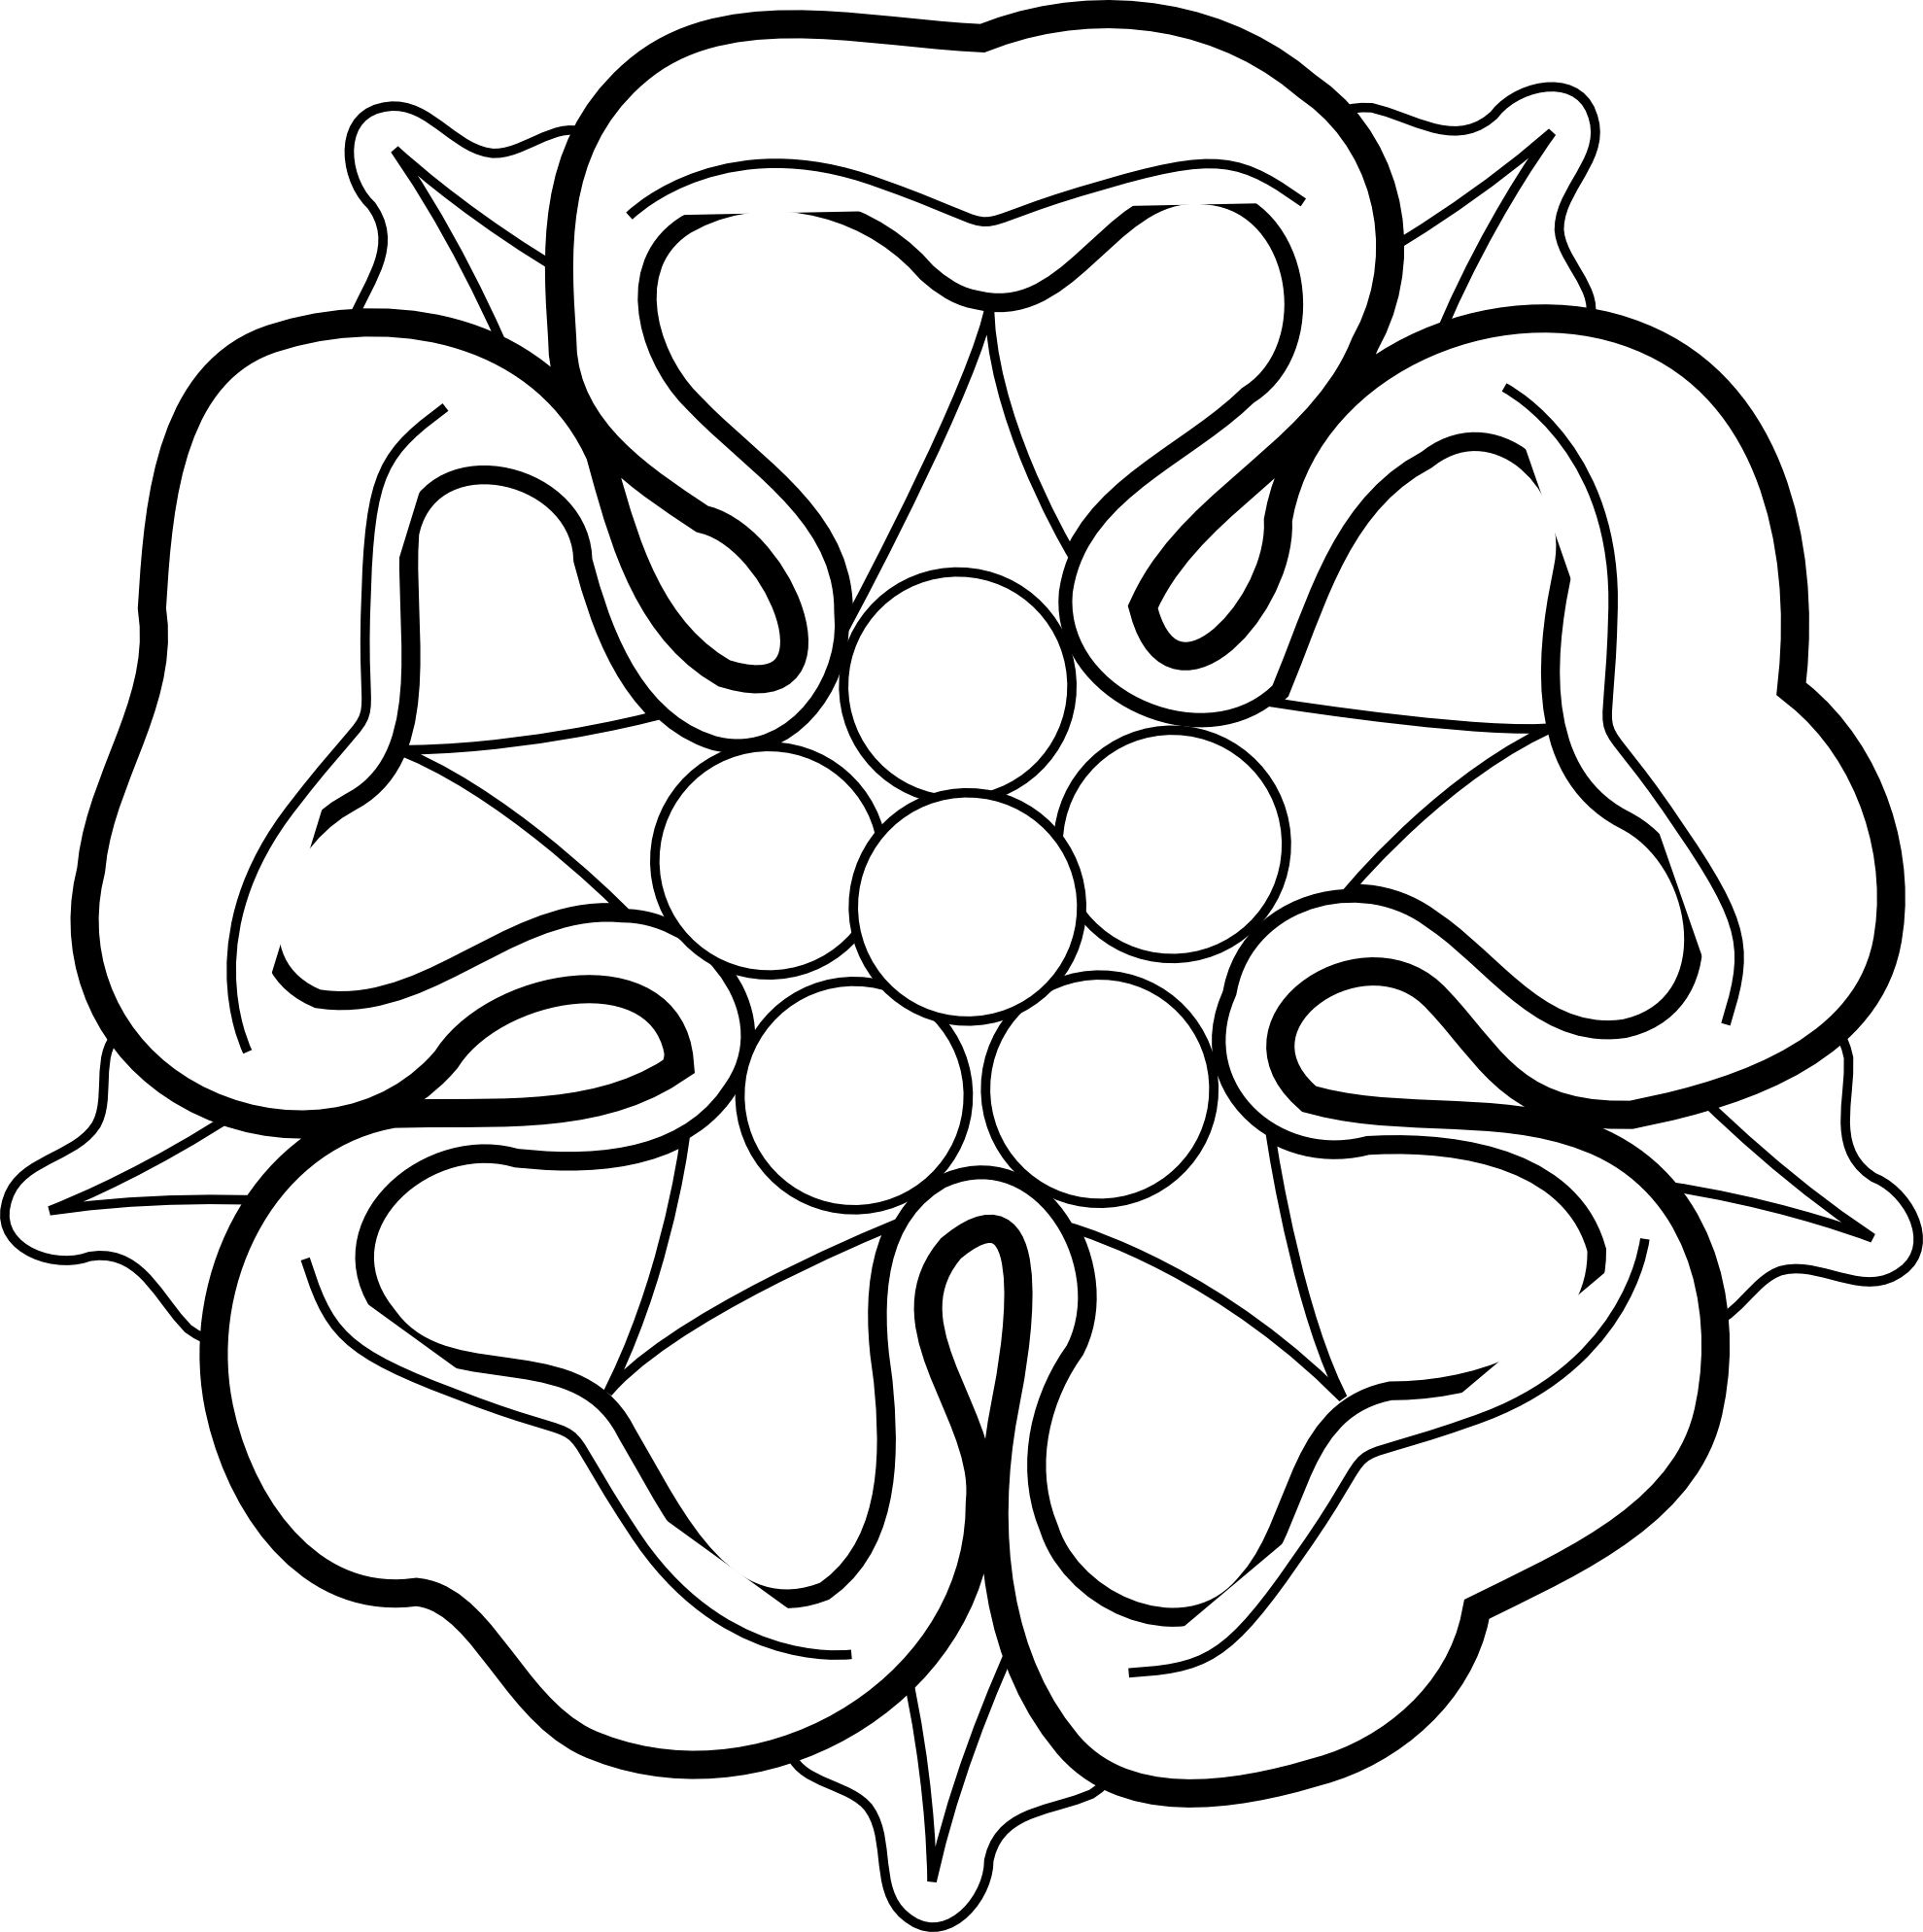 heraldic rose
